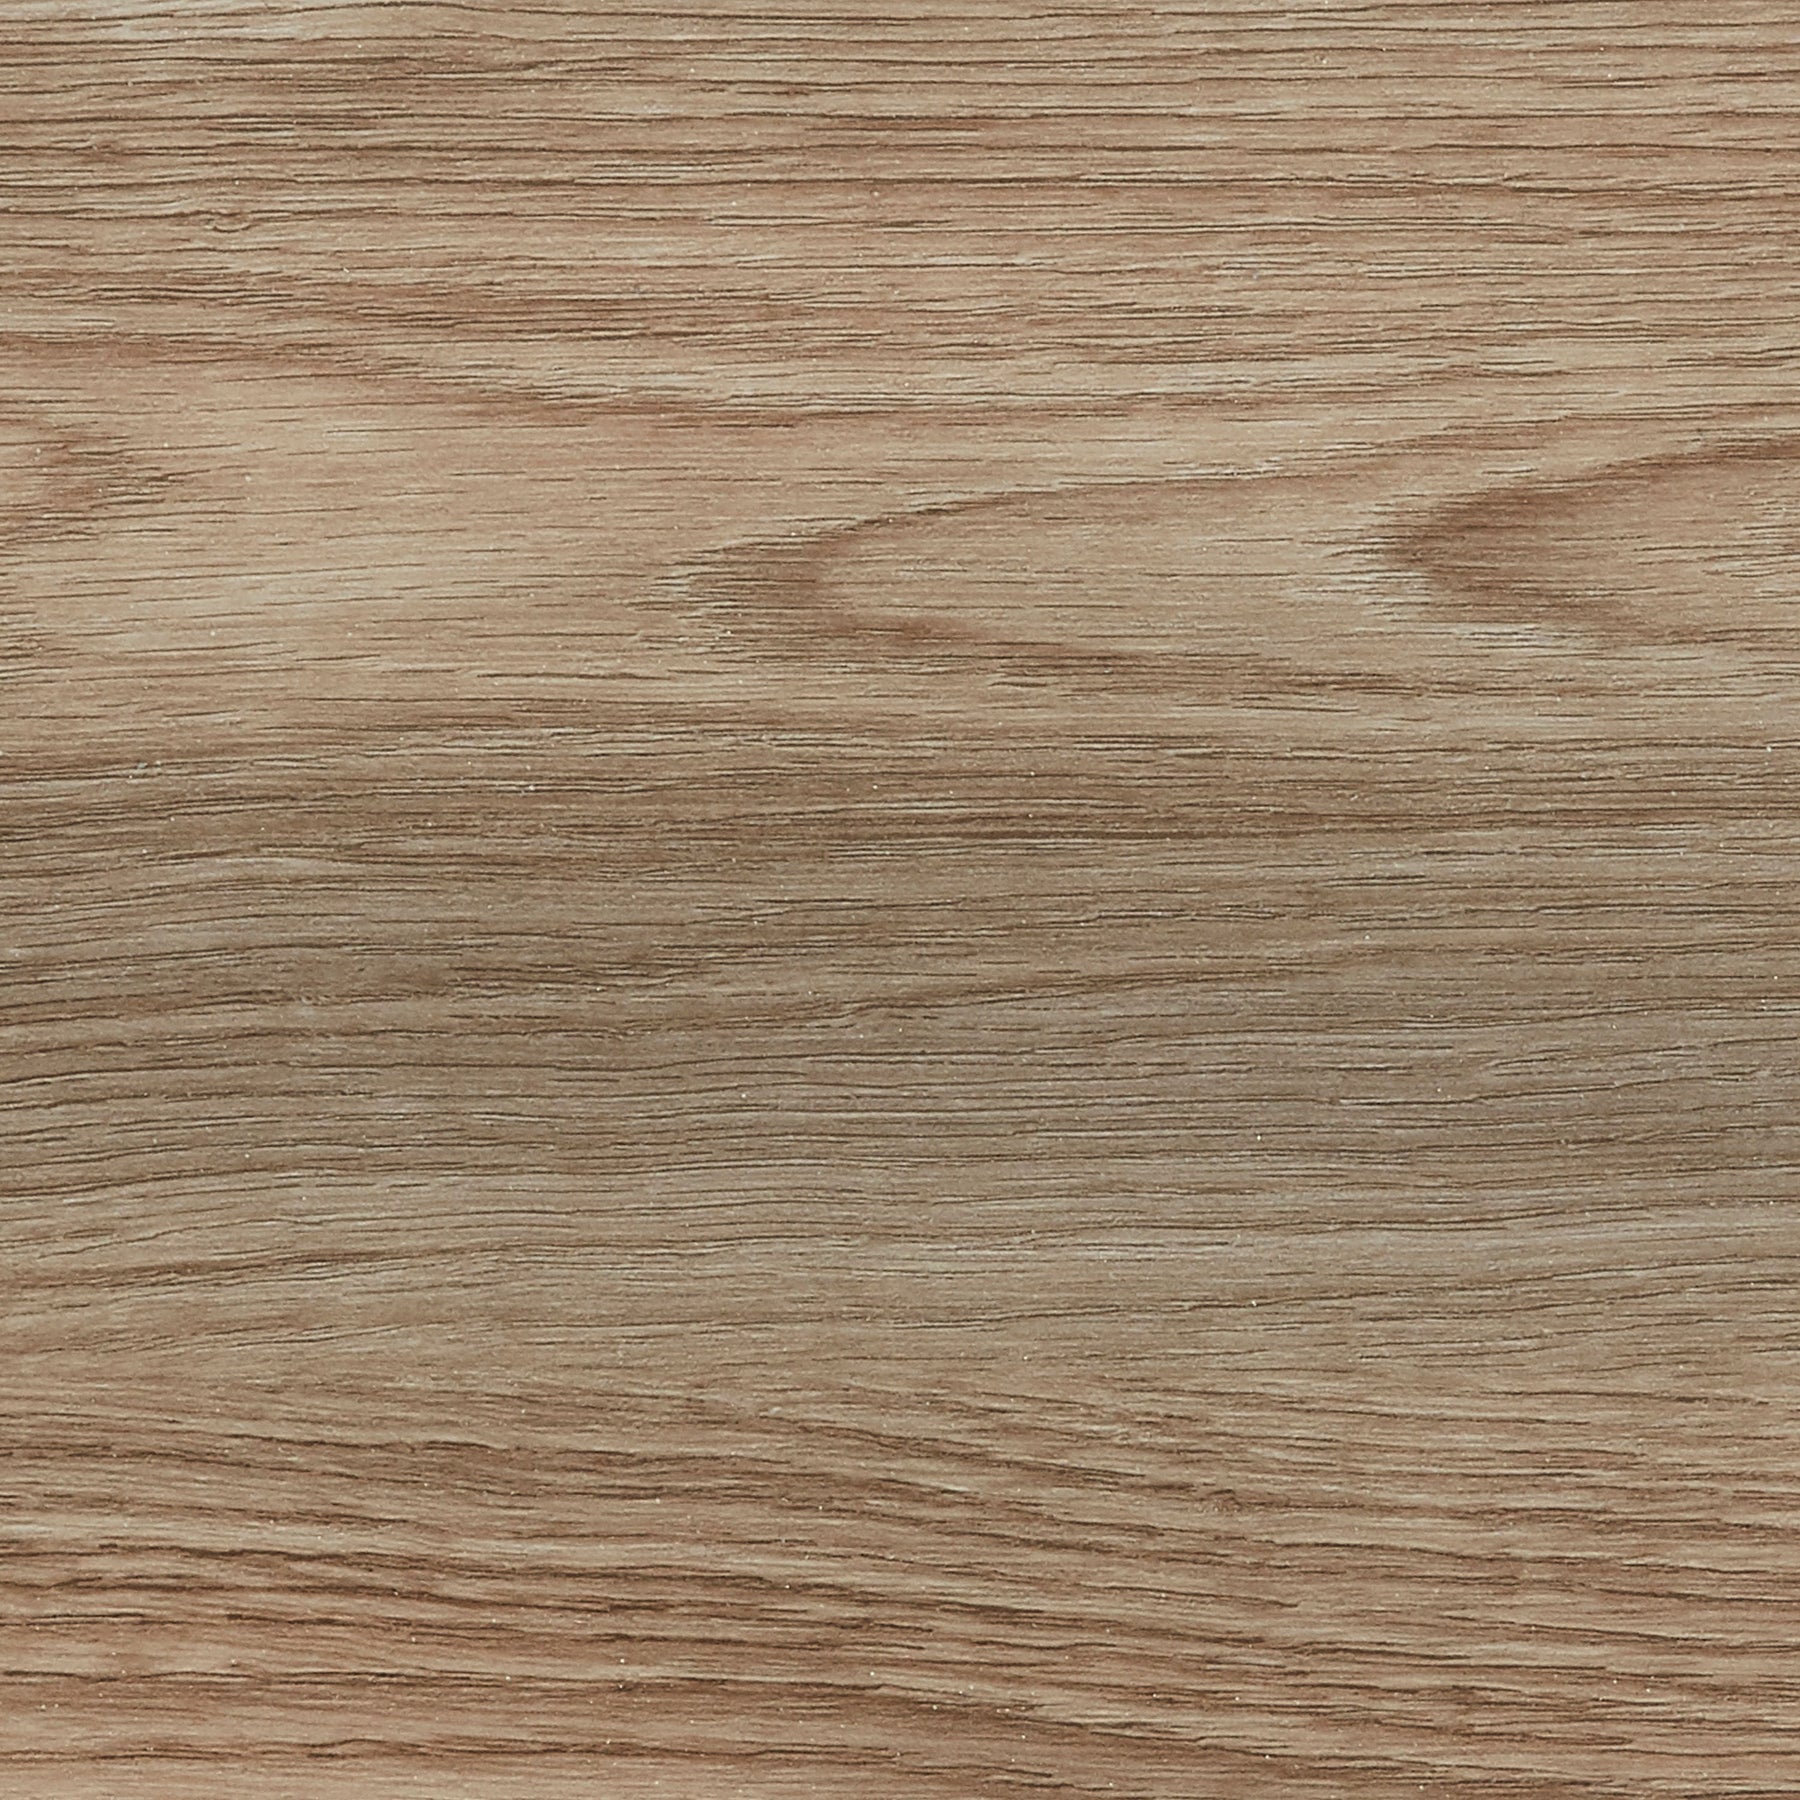 60001601 (Pure Click 55 Classic Oak (woodgrain) brown)